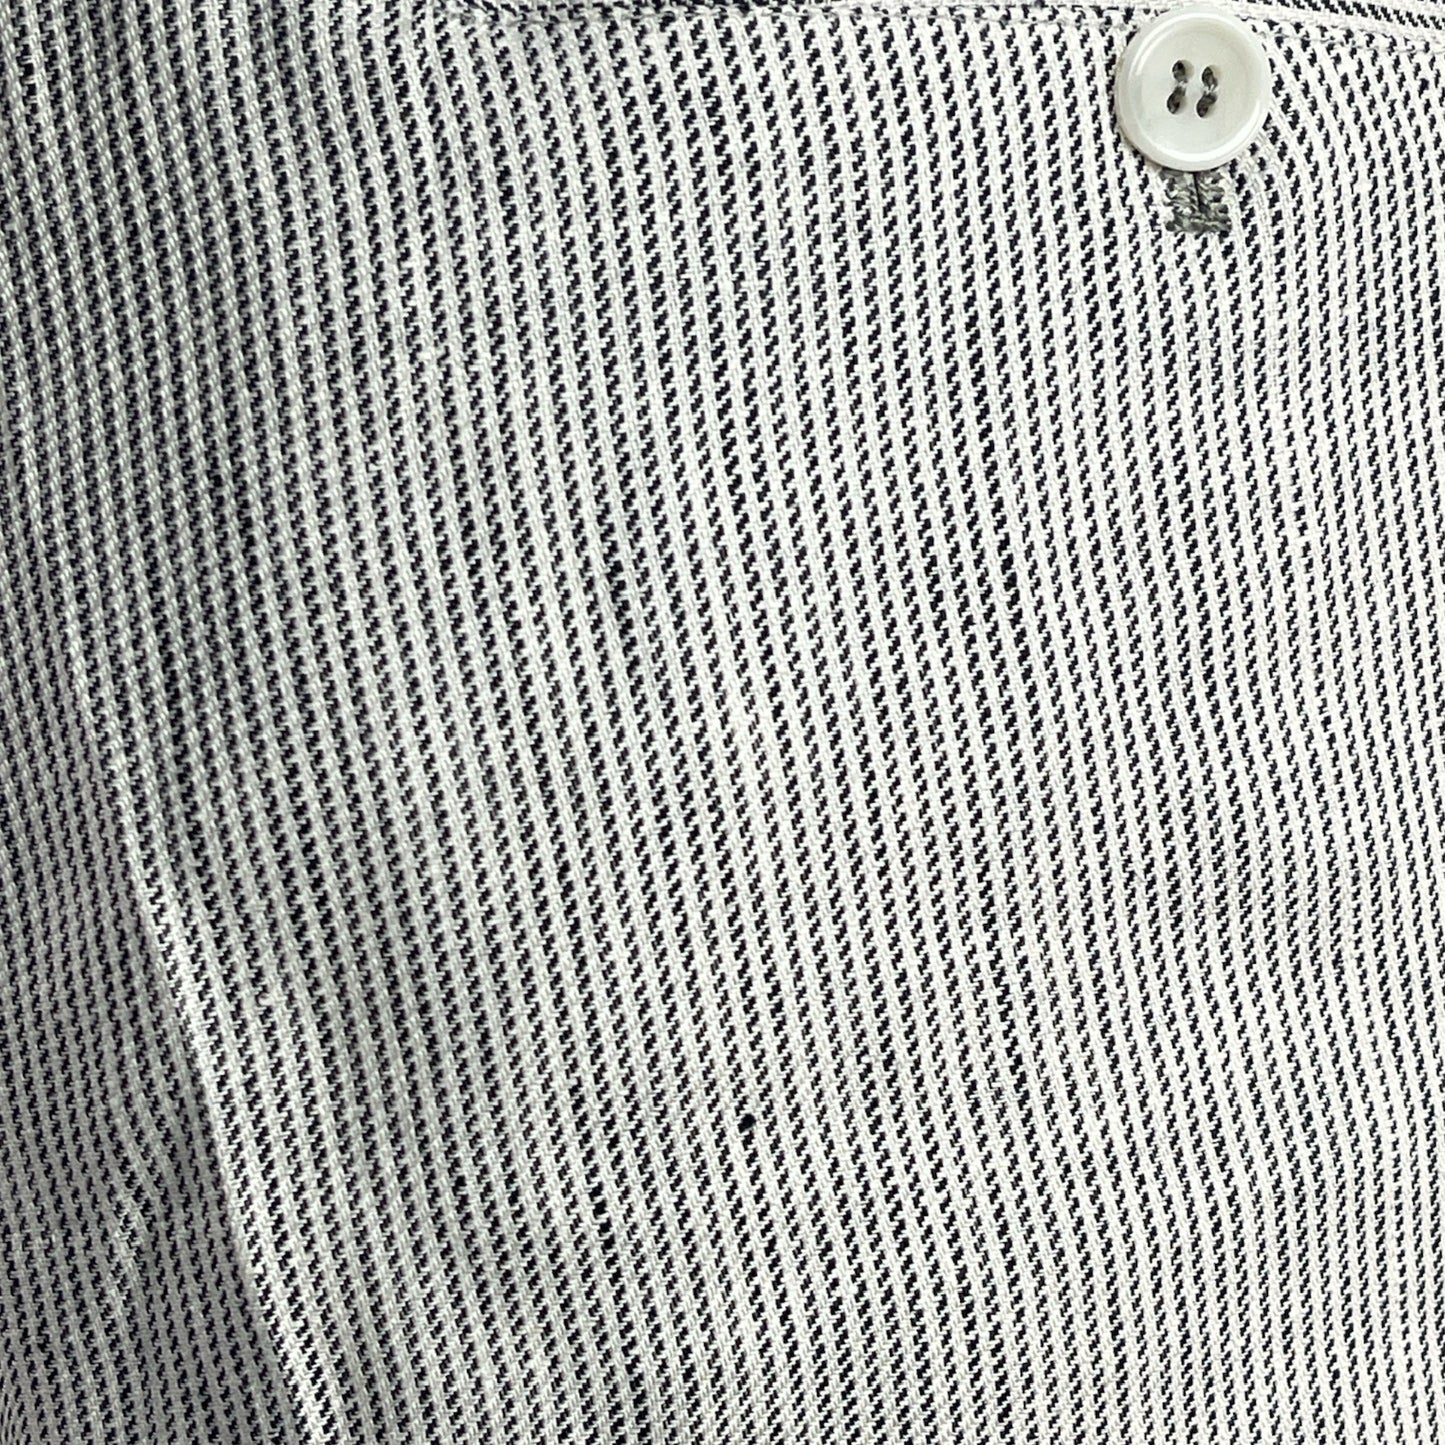 Pantalone  Sartoriale tg. 56 -  Bianco & Nero - Lino